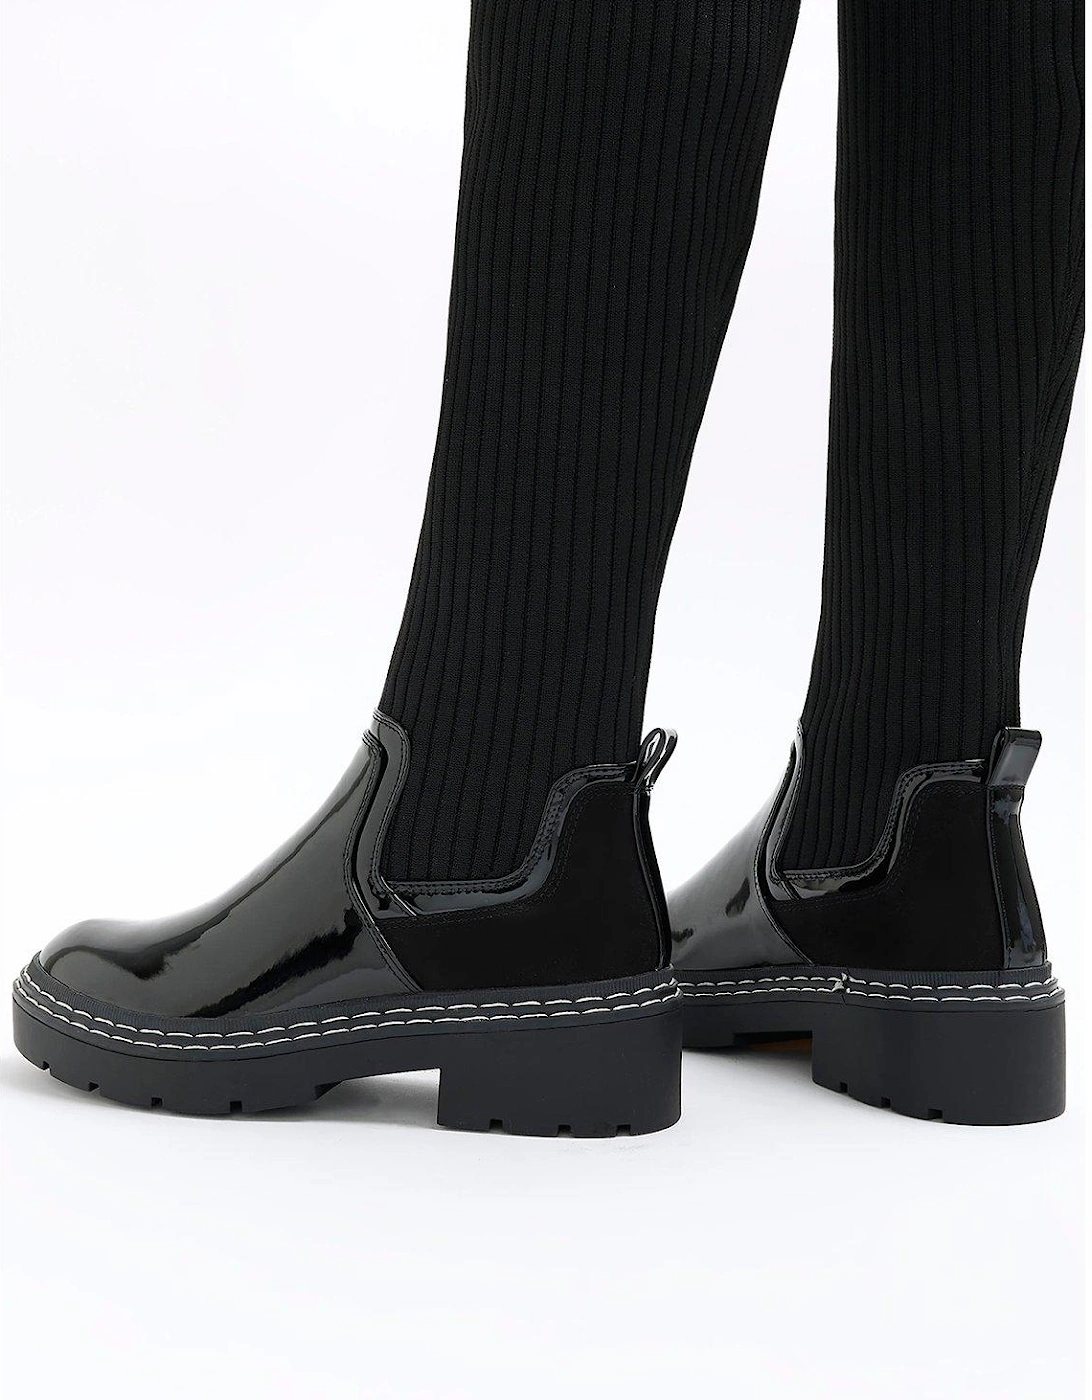 Knitted High Leg Boot - Black